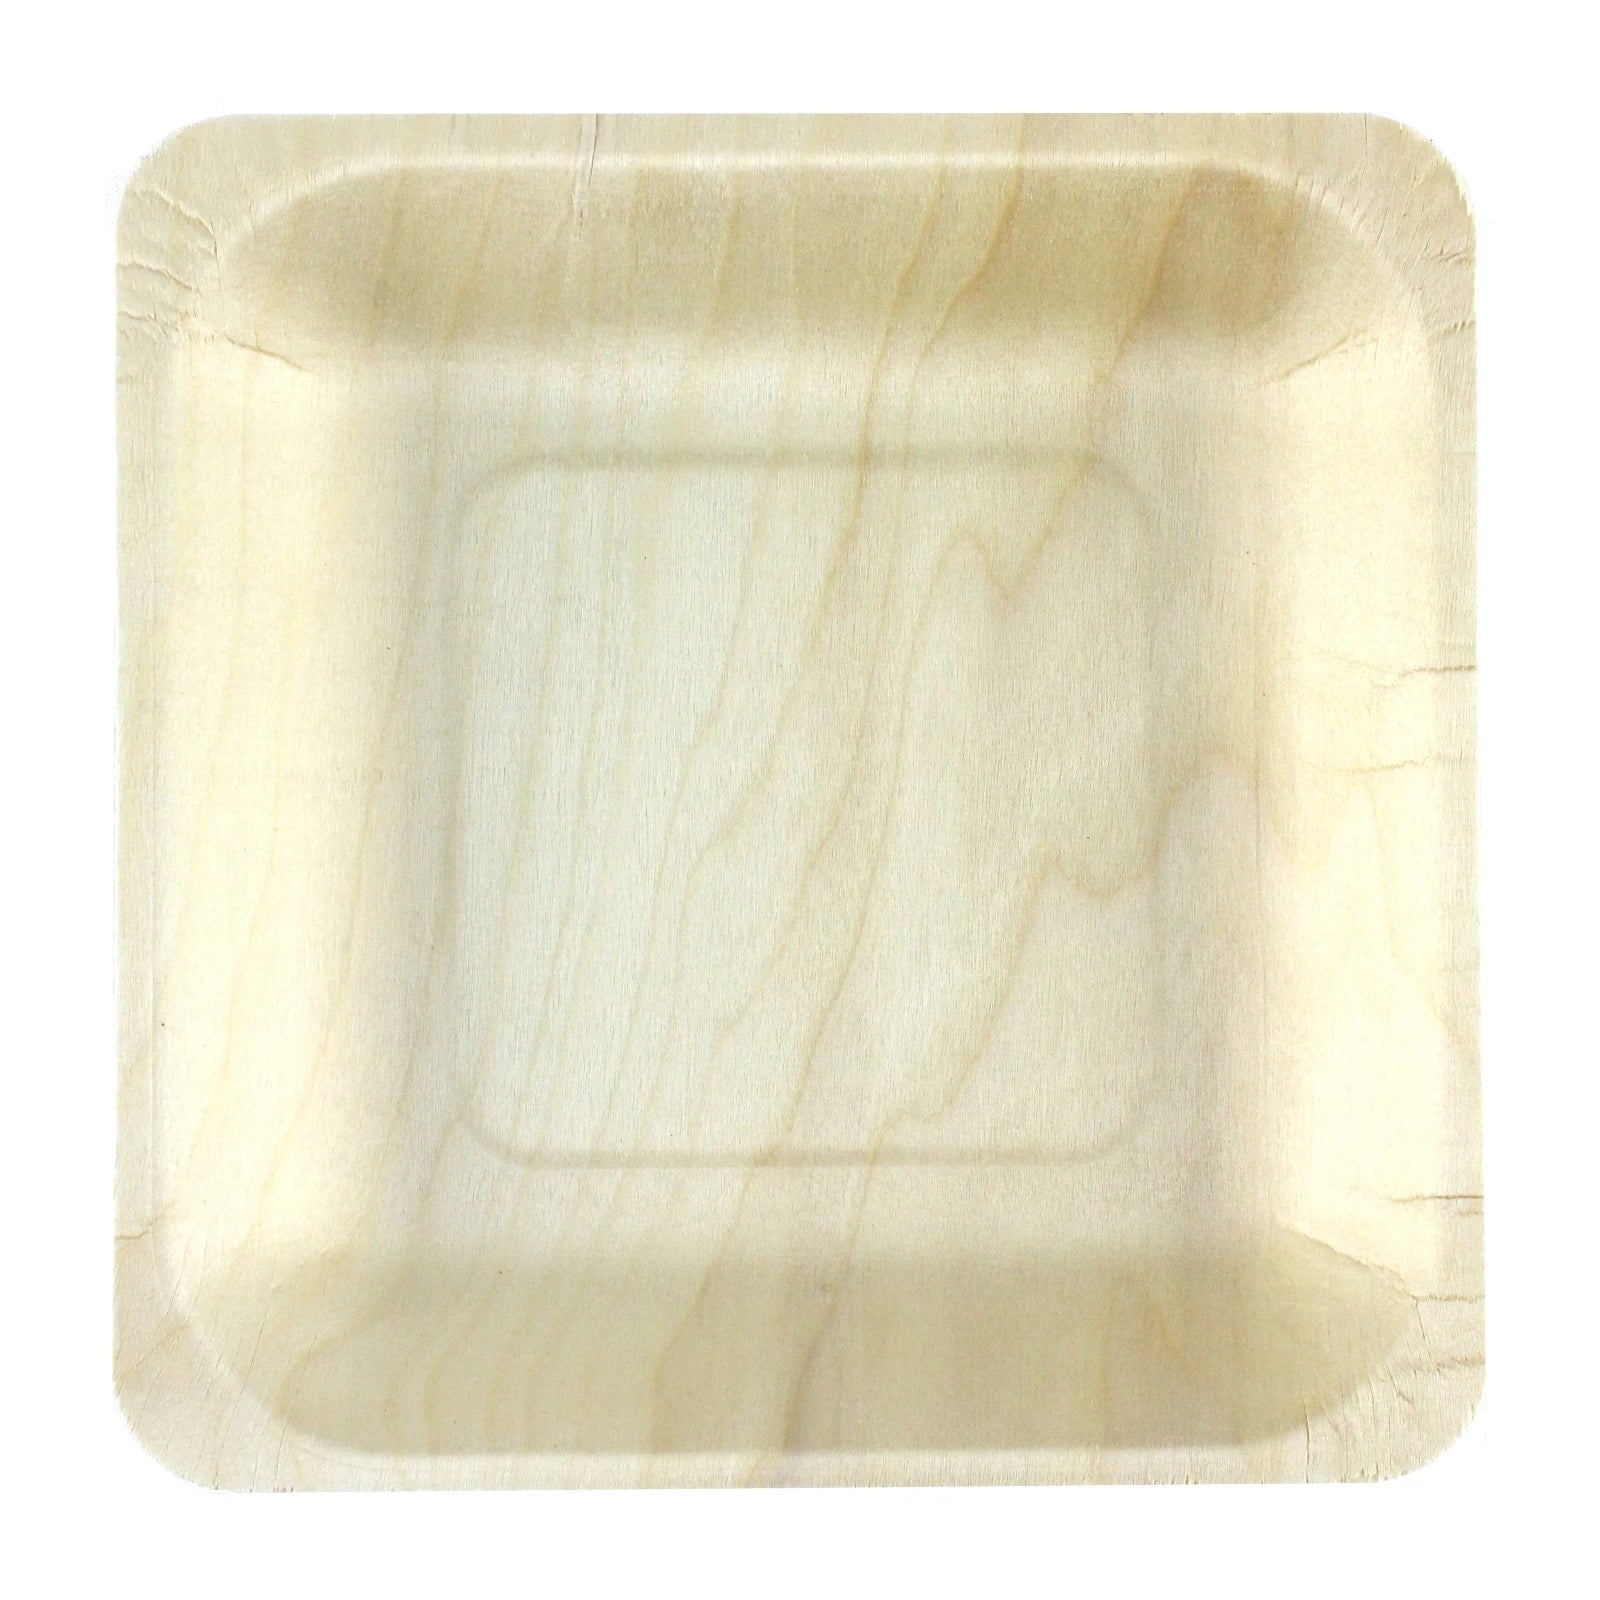 Wooden Square Plates Pk 10